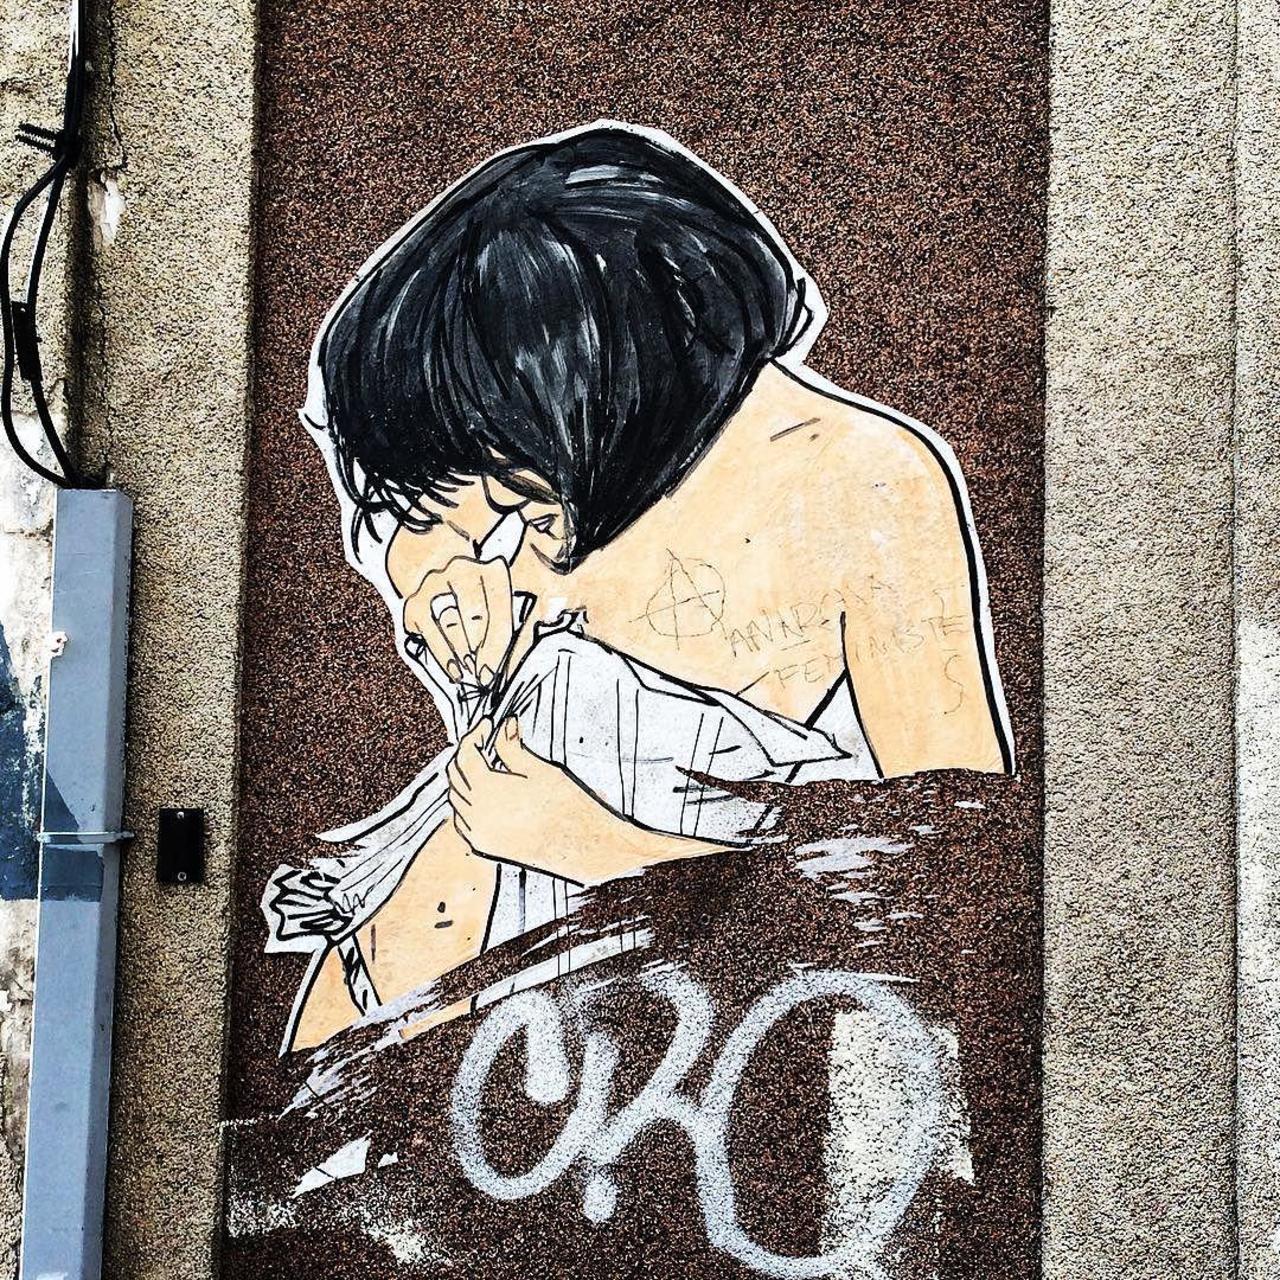 #Paris #graffiti photo by @julosteart http://ift.tt/1Lvi1ii #StreetArt http://t.co/JqNs5R2SnF